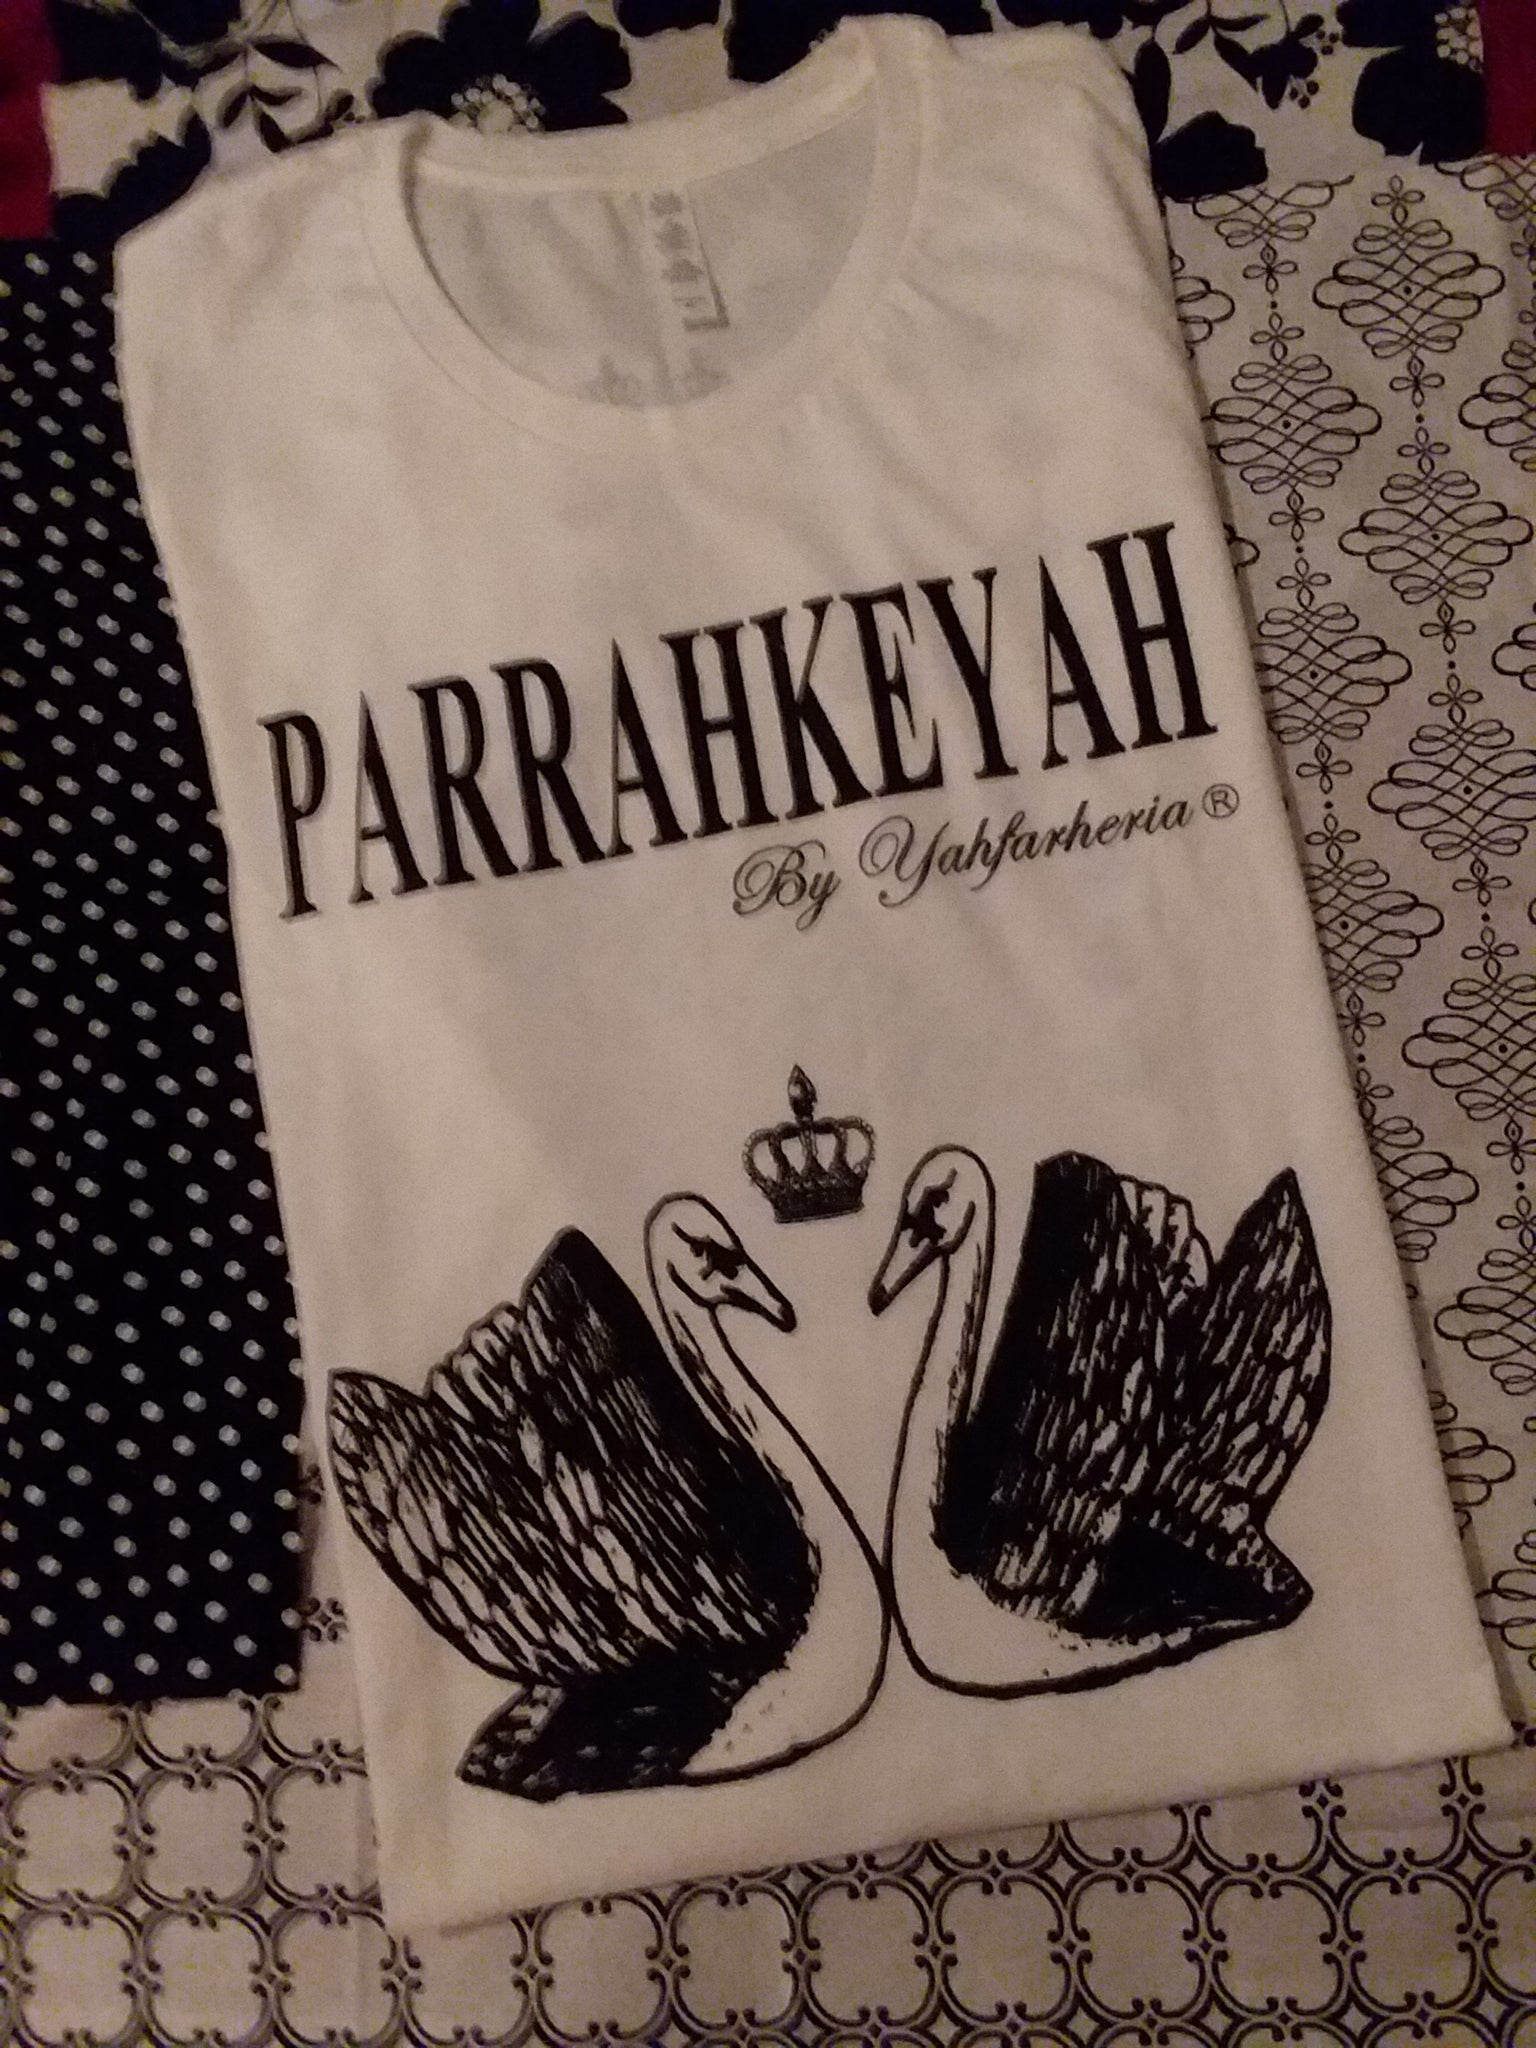 PARRAHKEYAH Black/White T-Shirt Bundle - w/TOTE-ME BAG